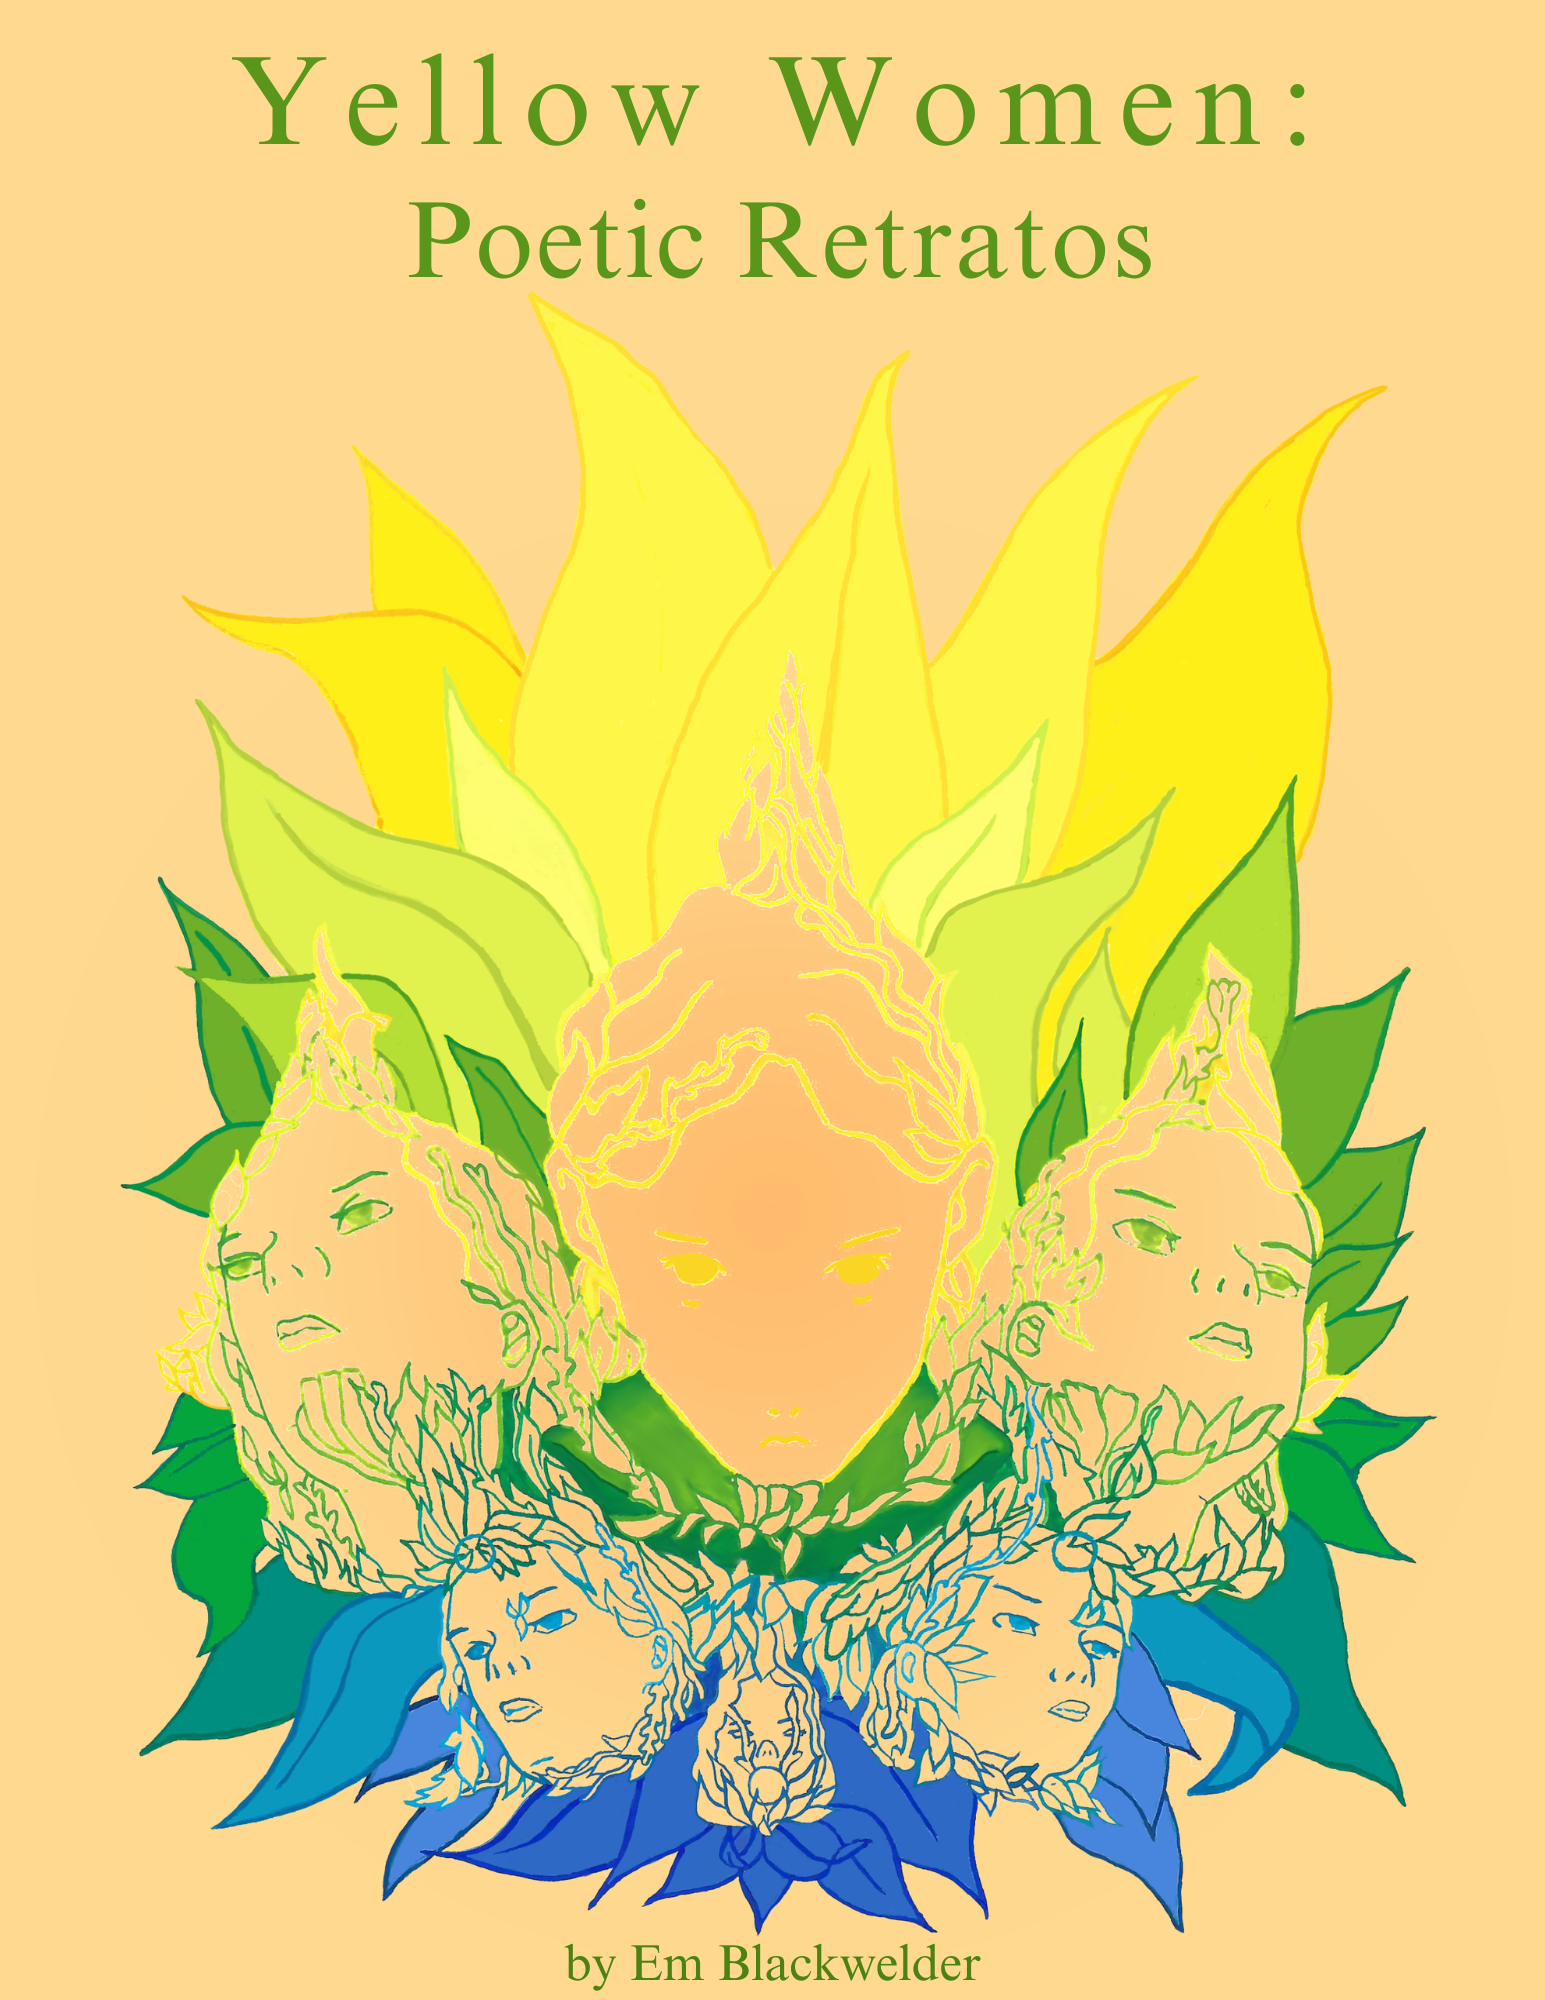 Cover of the Poetry Chapbook "Yellow Women: Poetic Retratos"